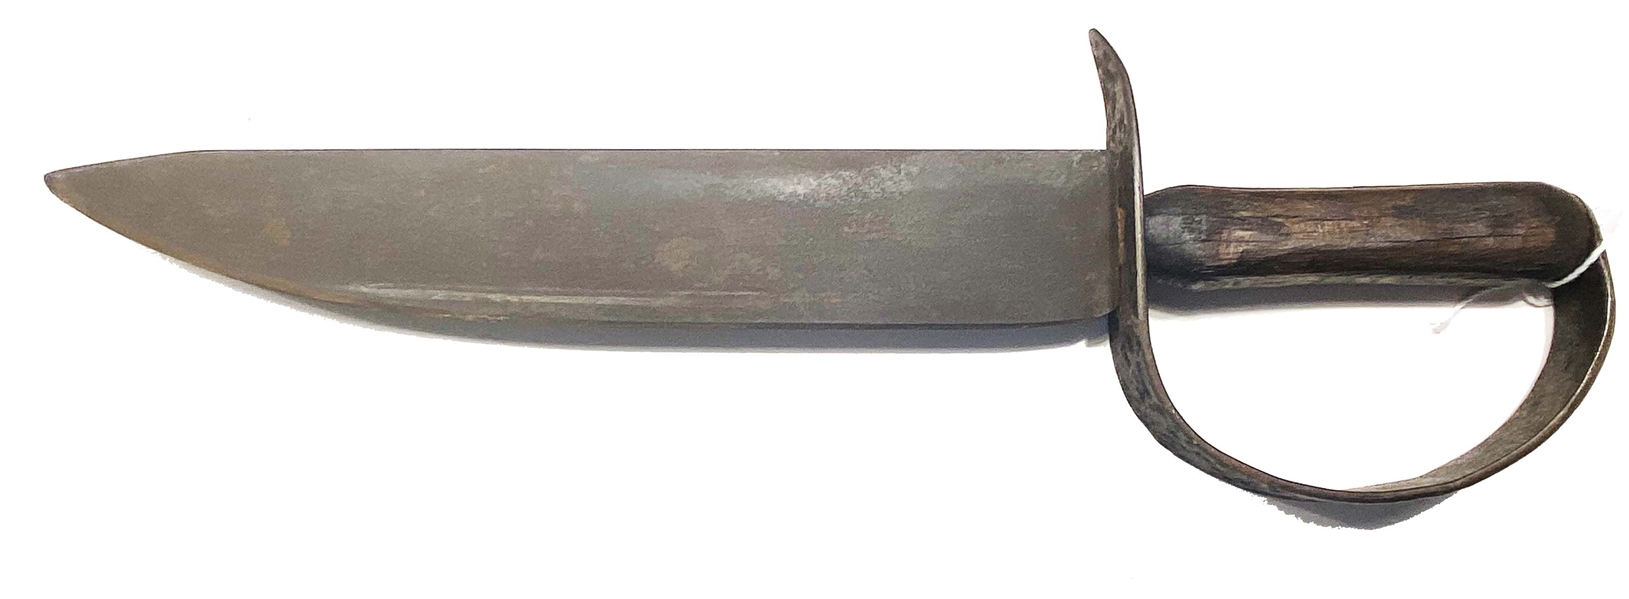 Confederate D Guard Bowie Knife, ca. 1860s.